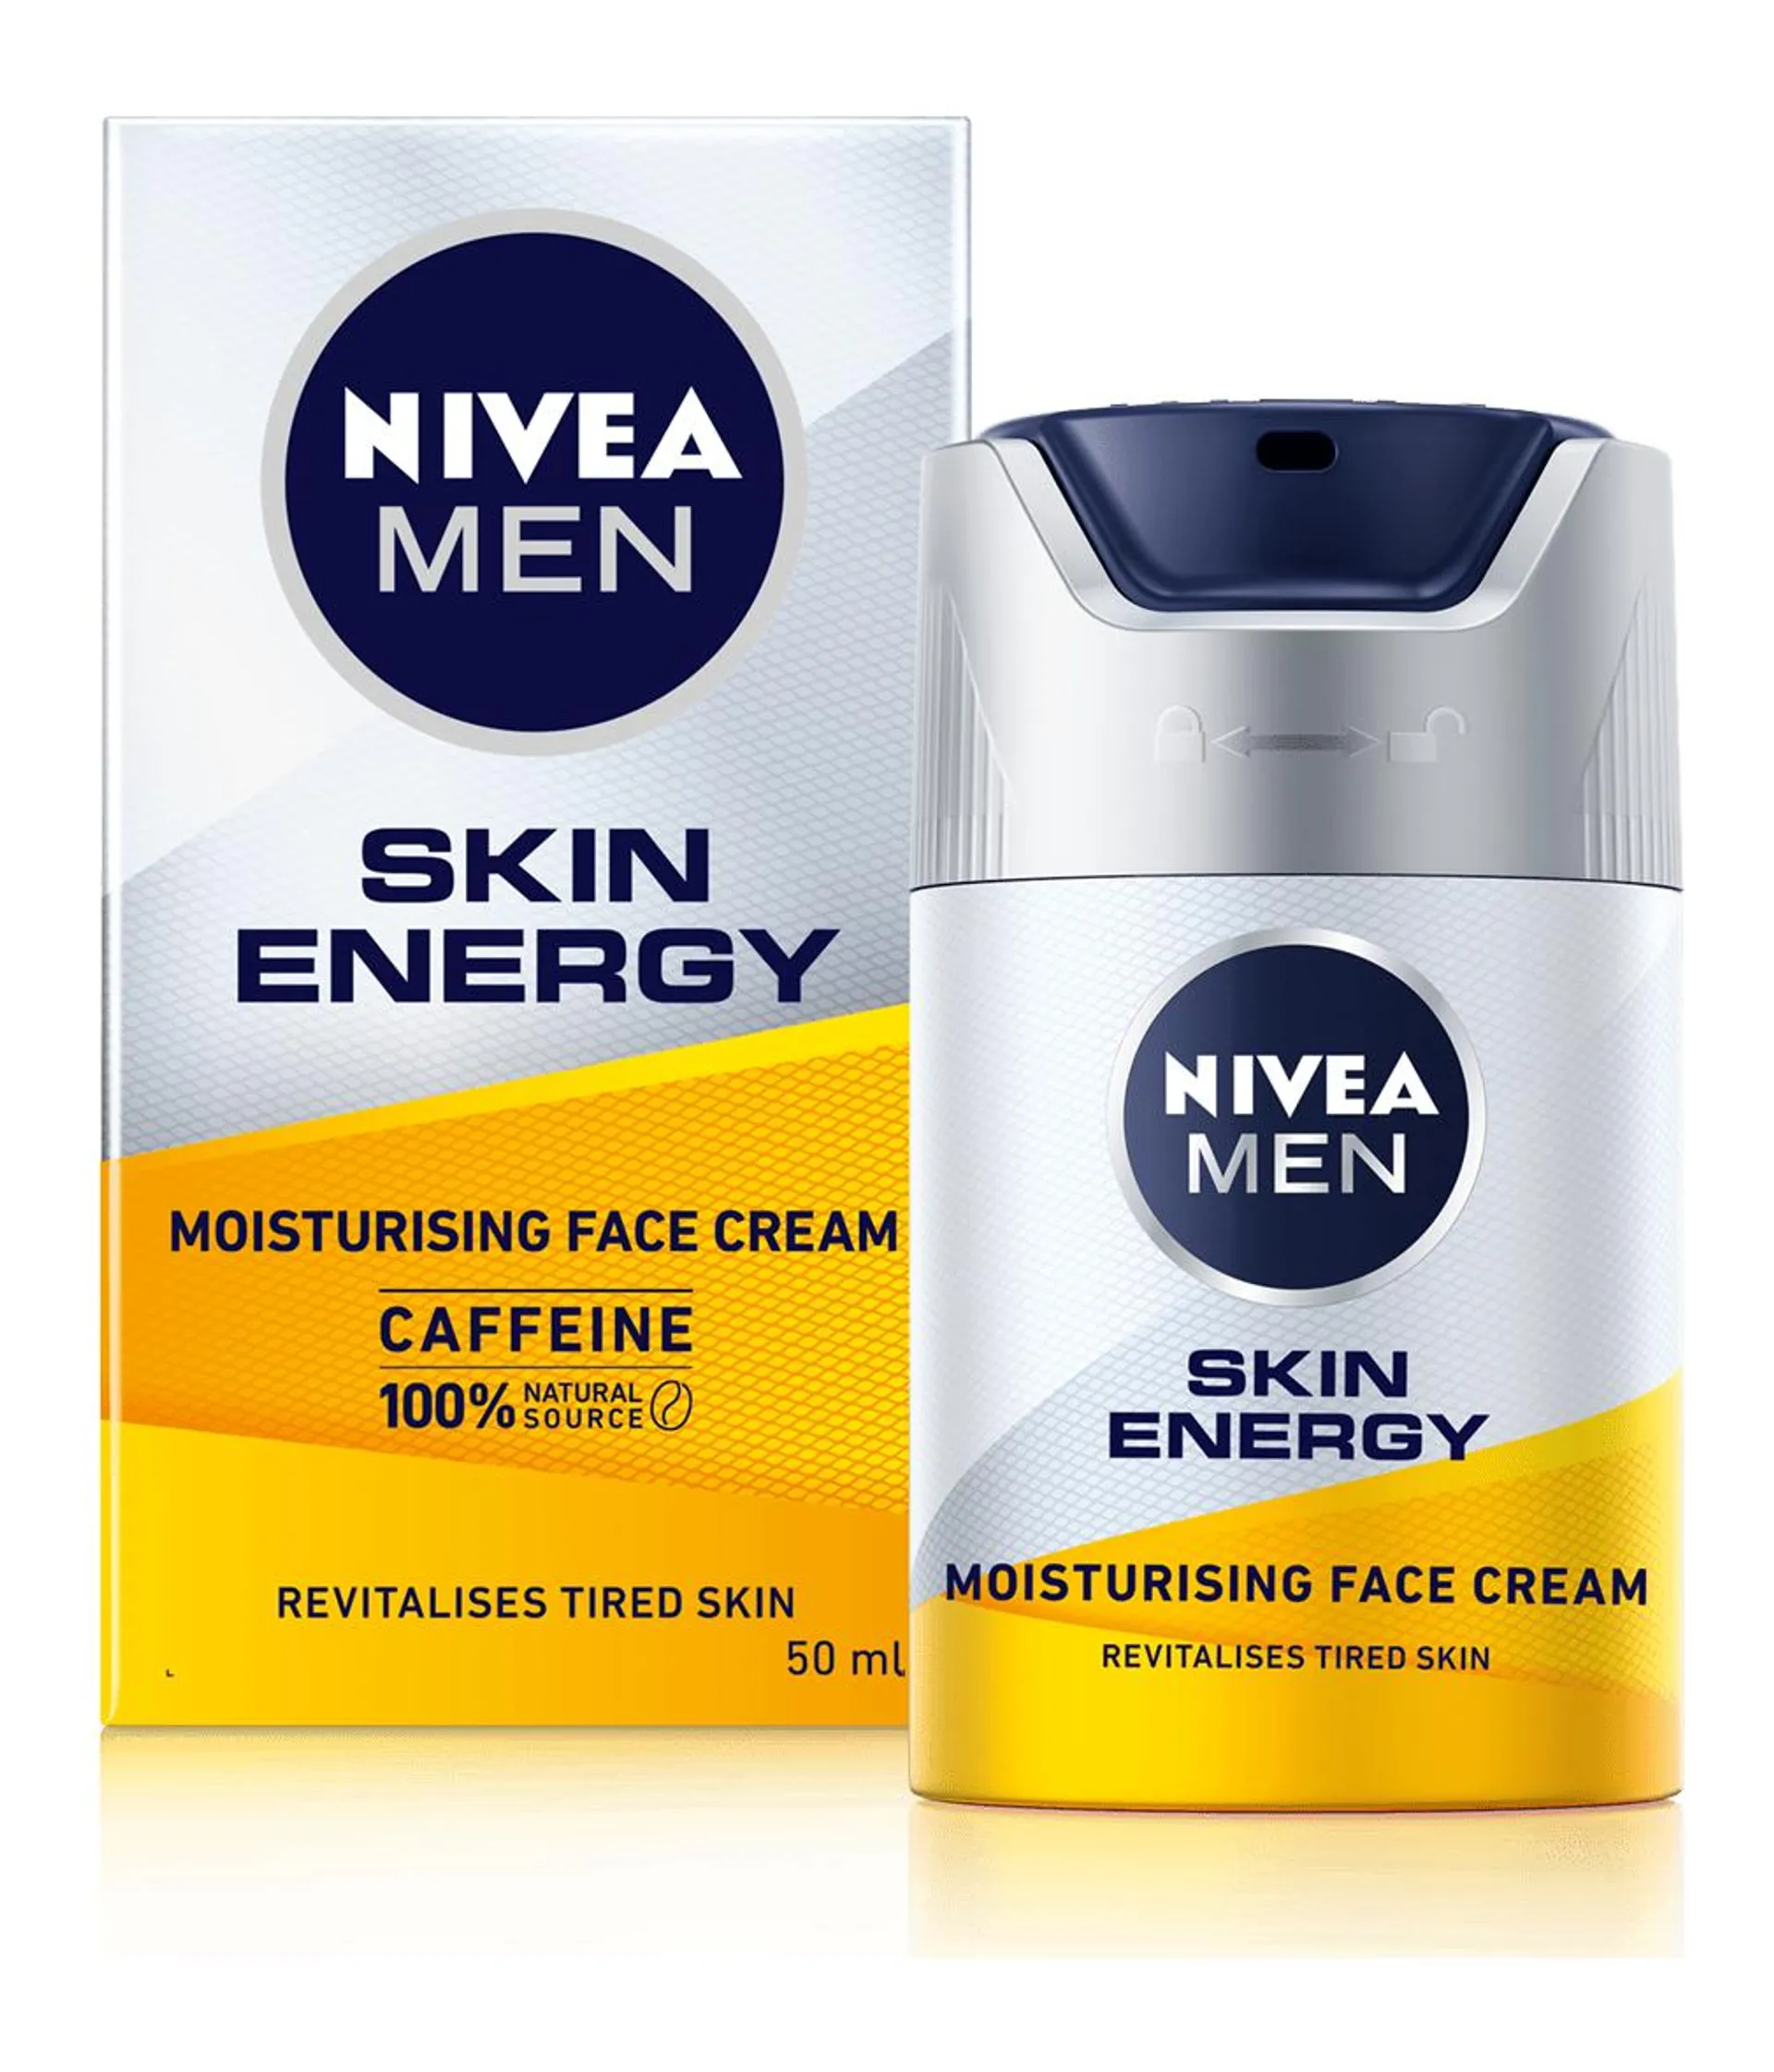 Nivea Men Skin Energy Moisturising Face Cream